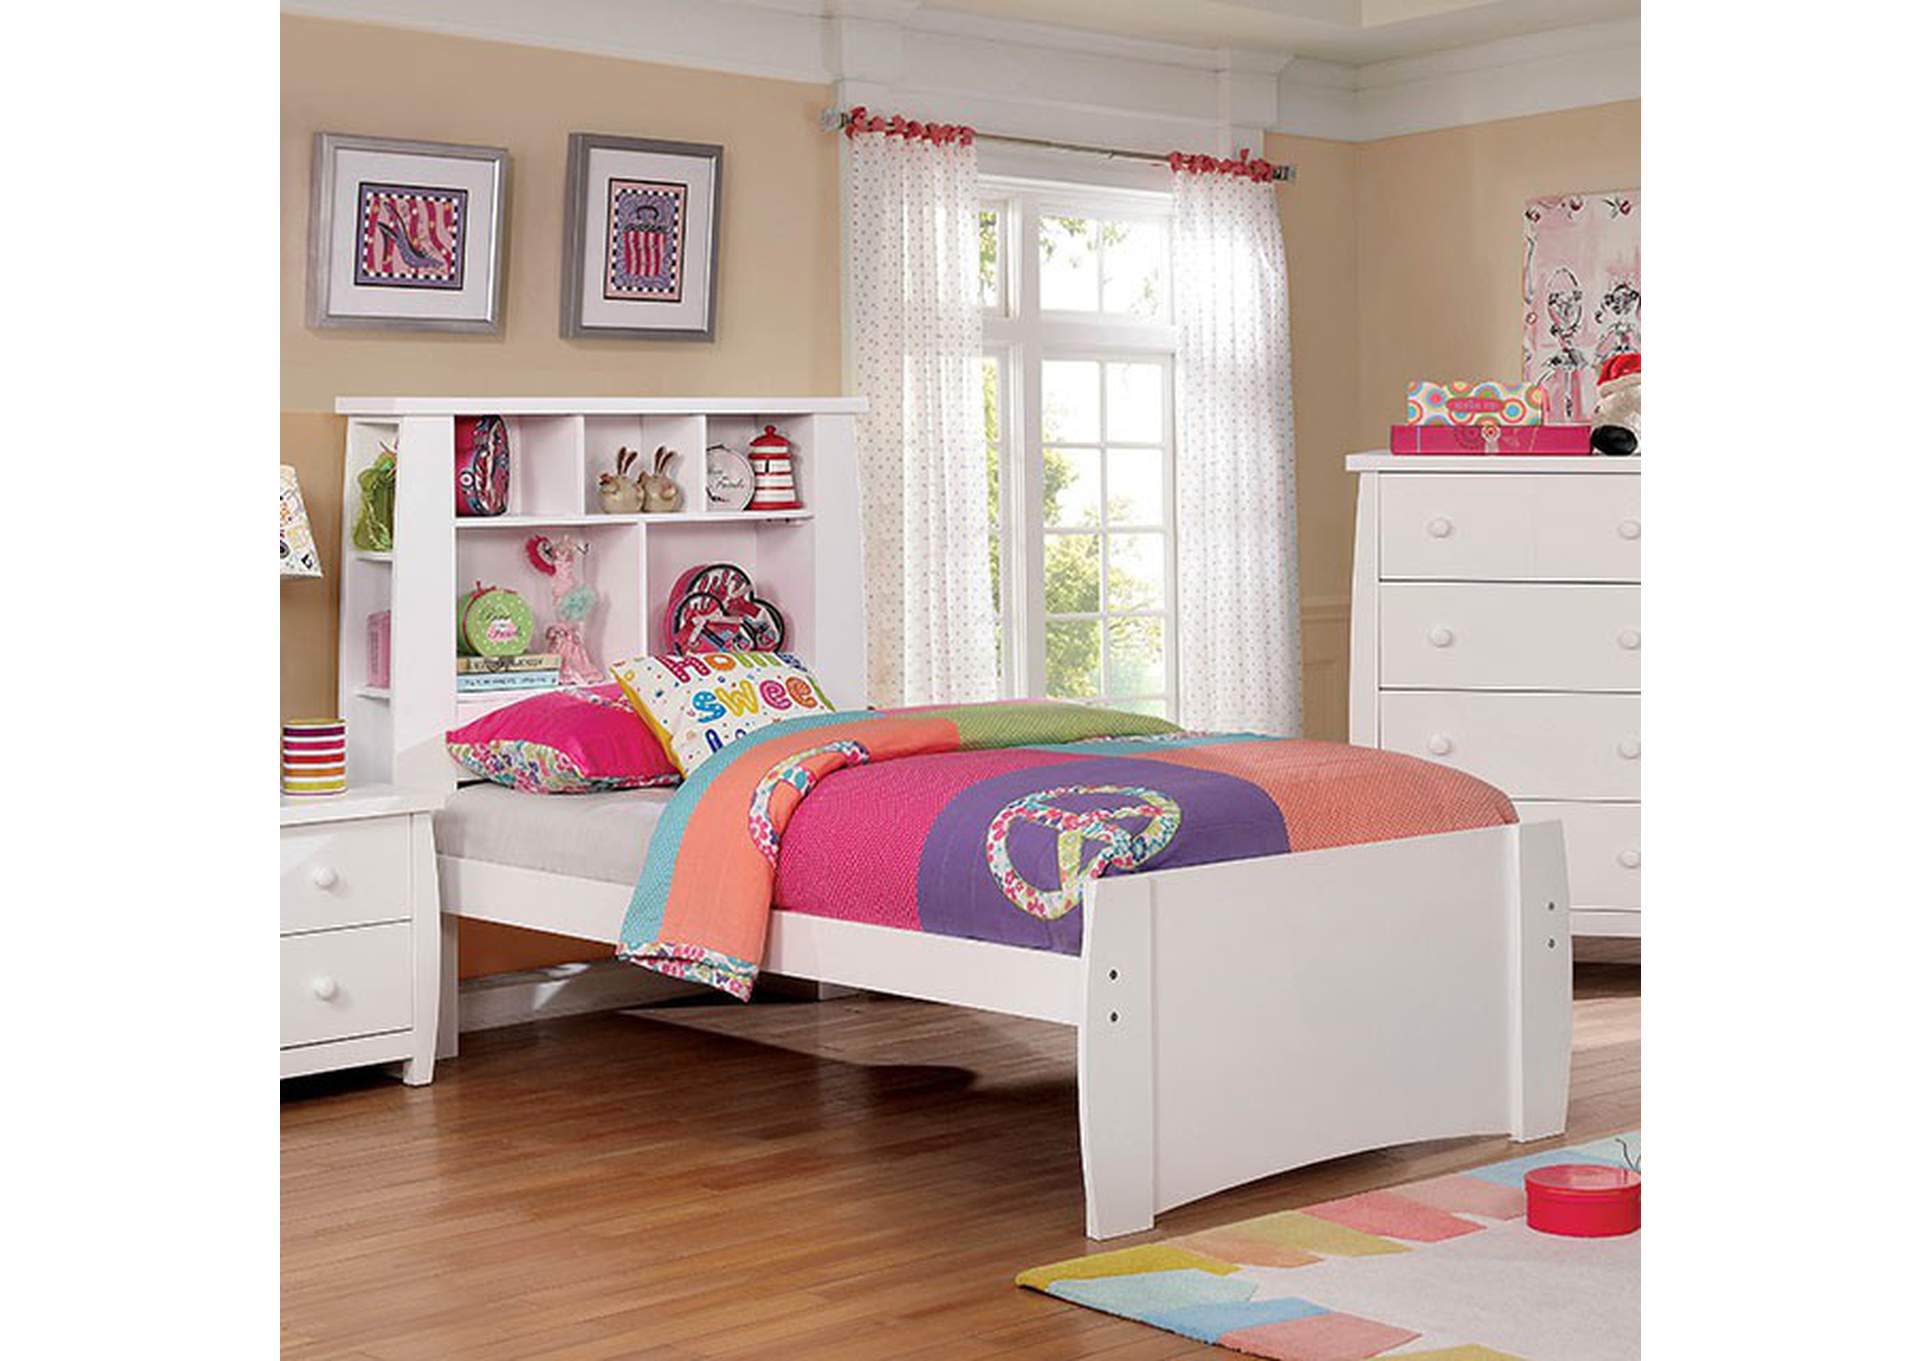 Marlee Full Bed,Furniture of America